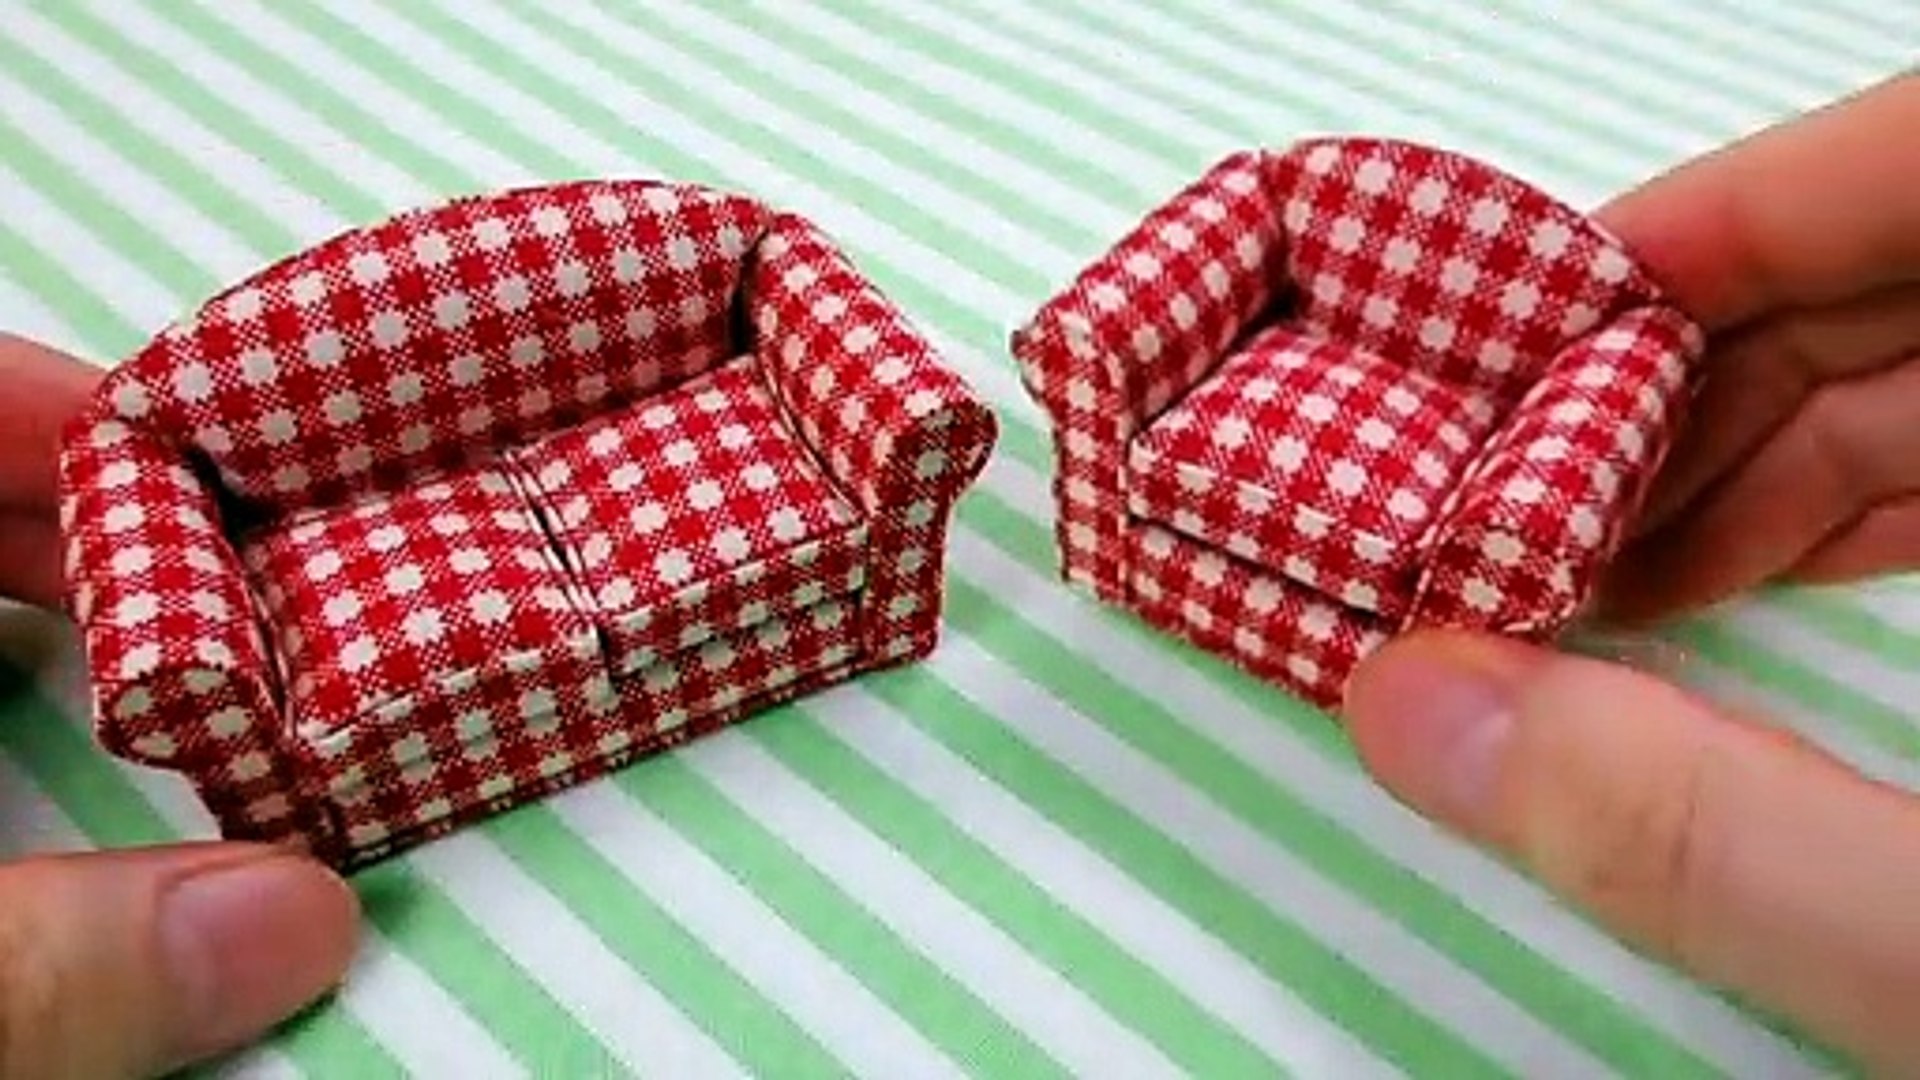 How To Make Mini Mini Sofa, Easy Craft Ideas